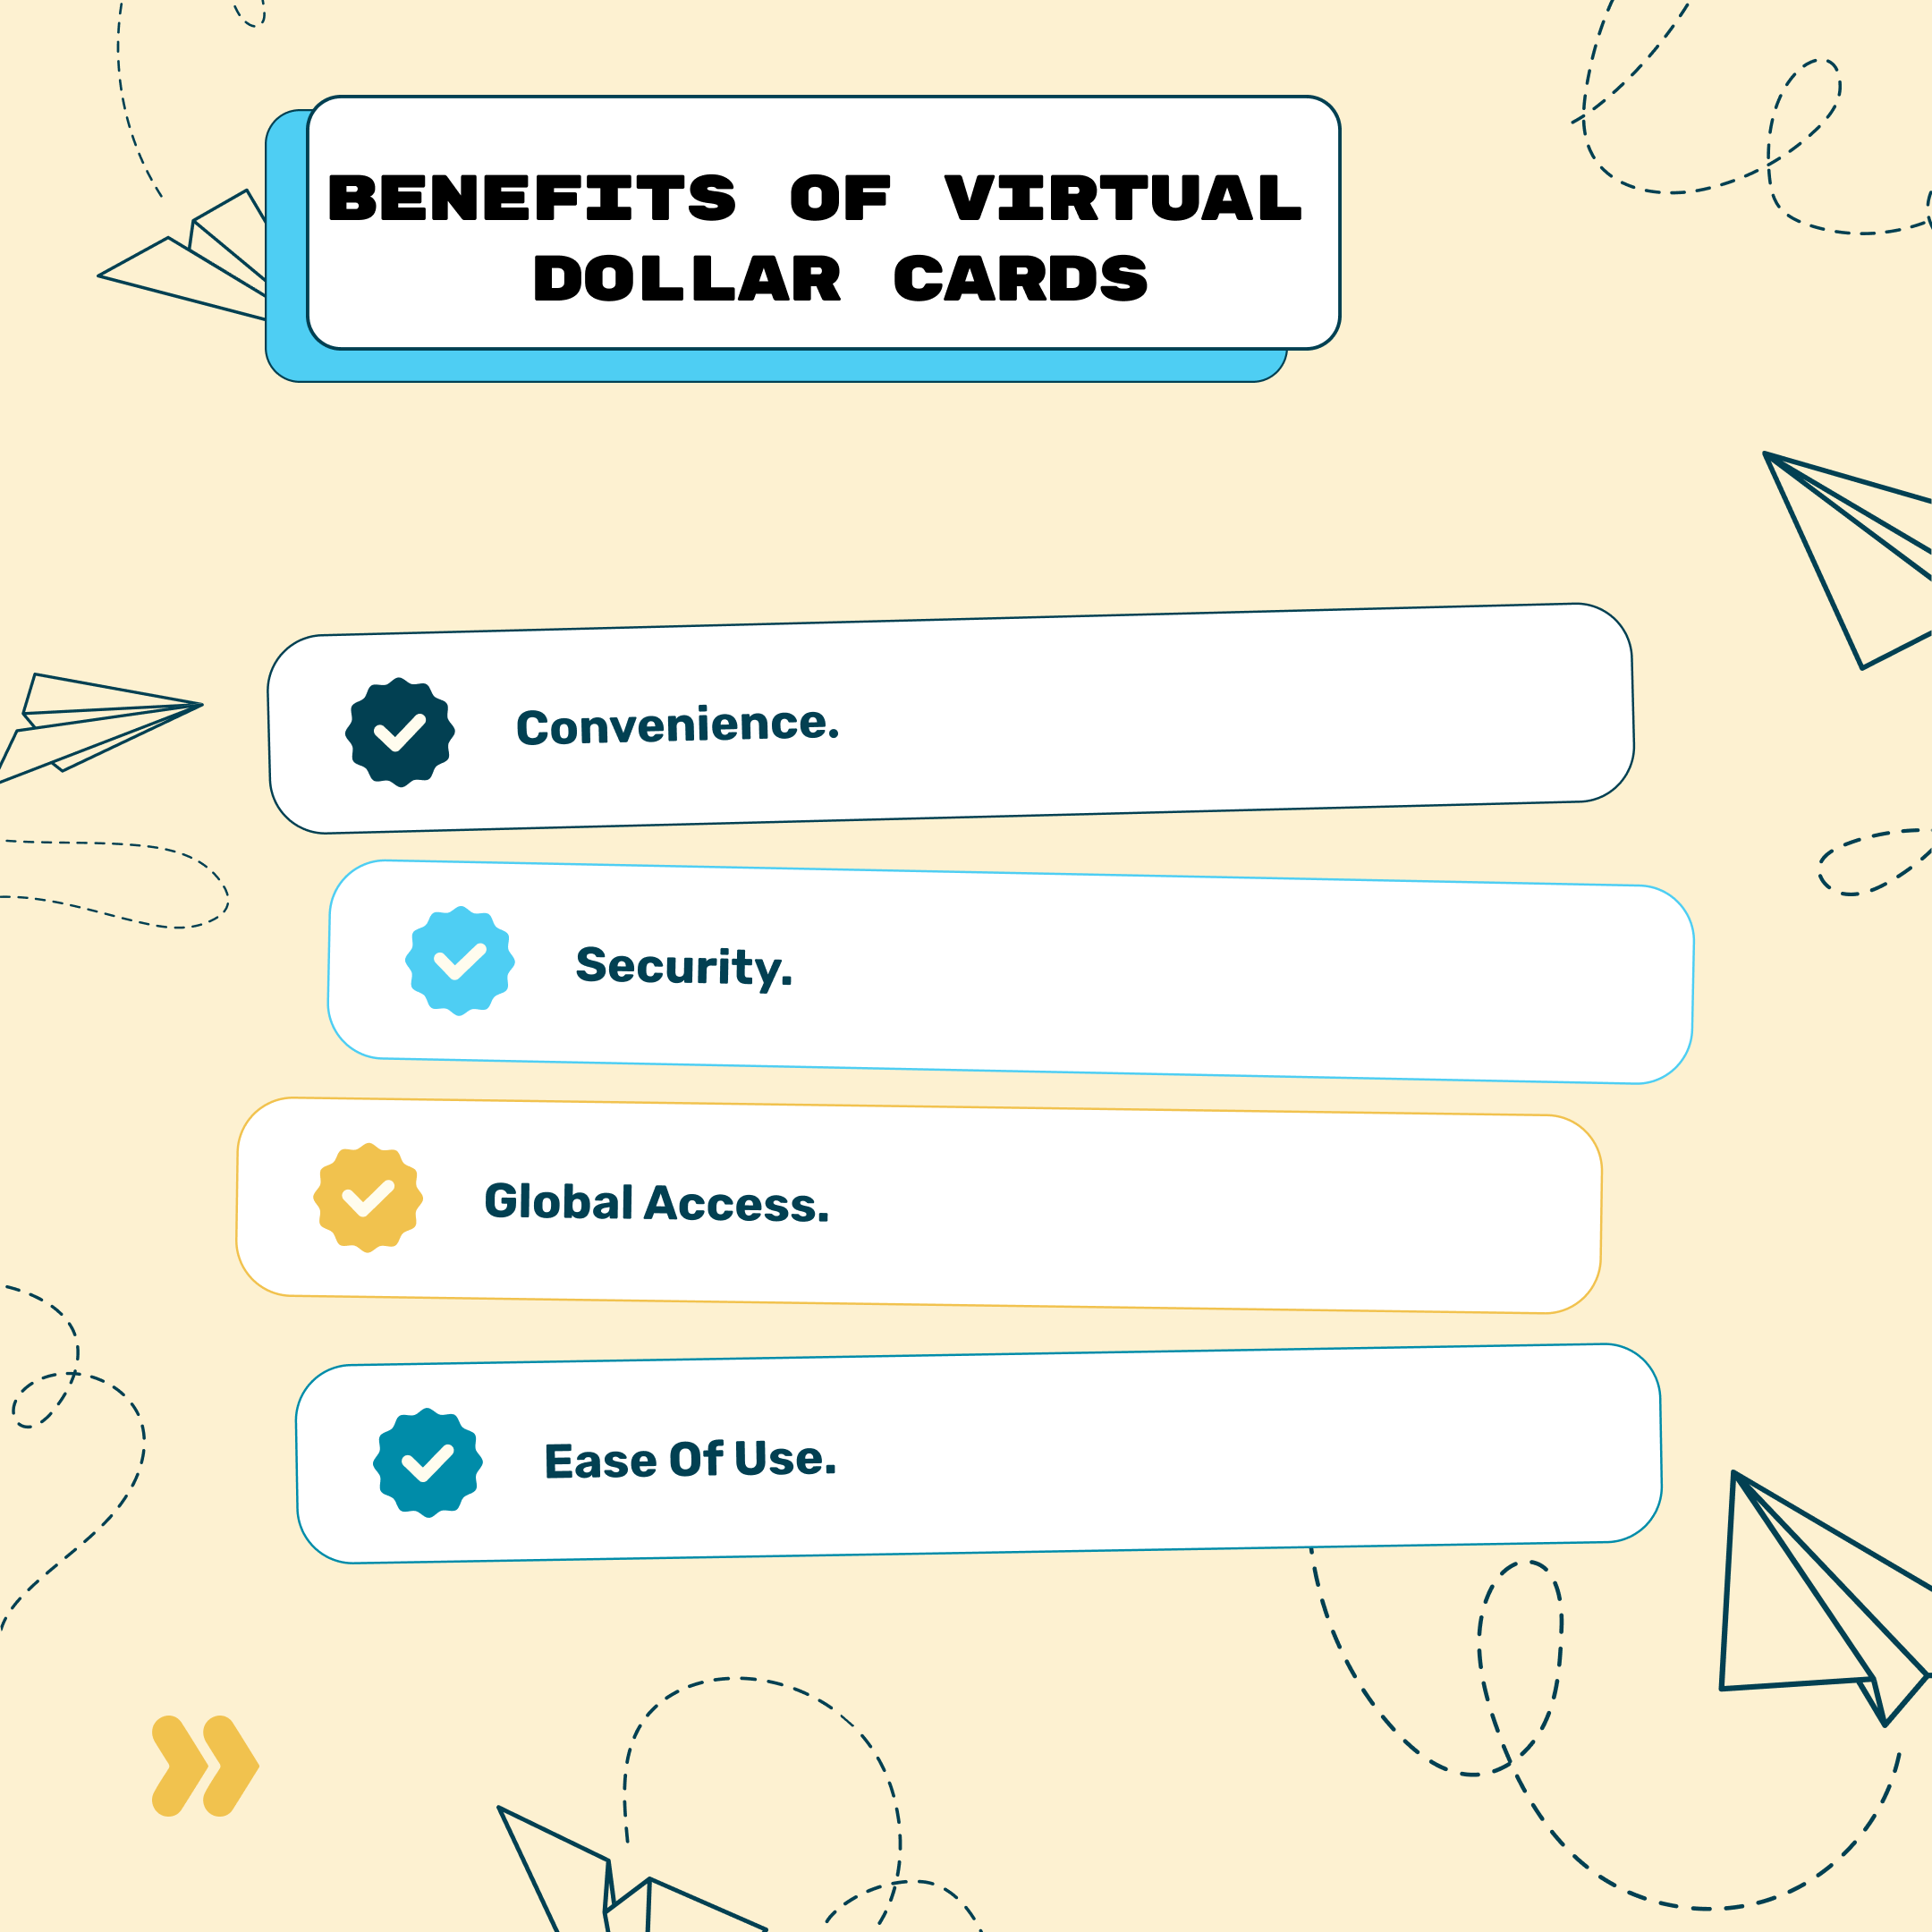 Benefits of virtual dollar cards